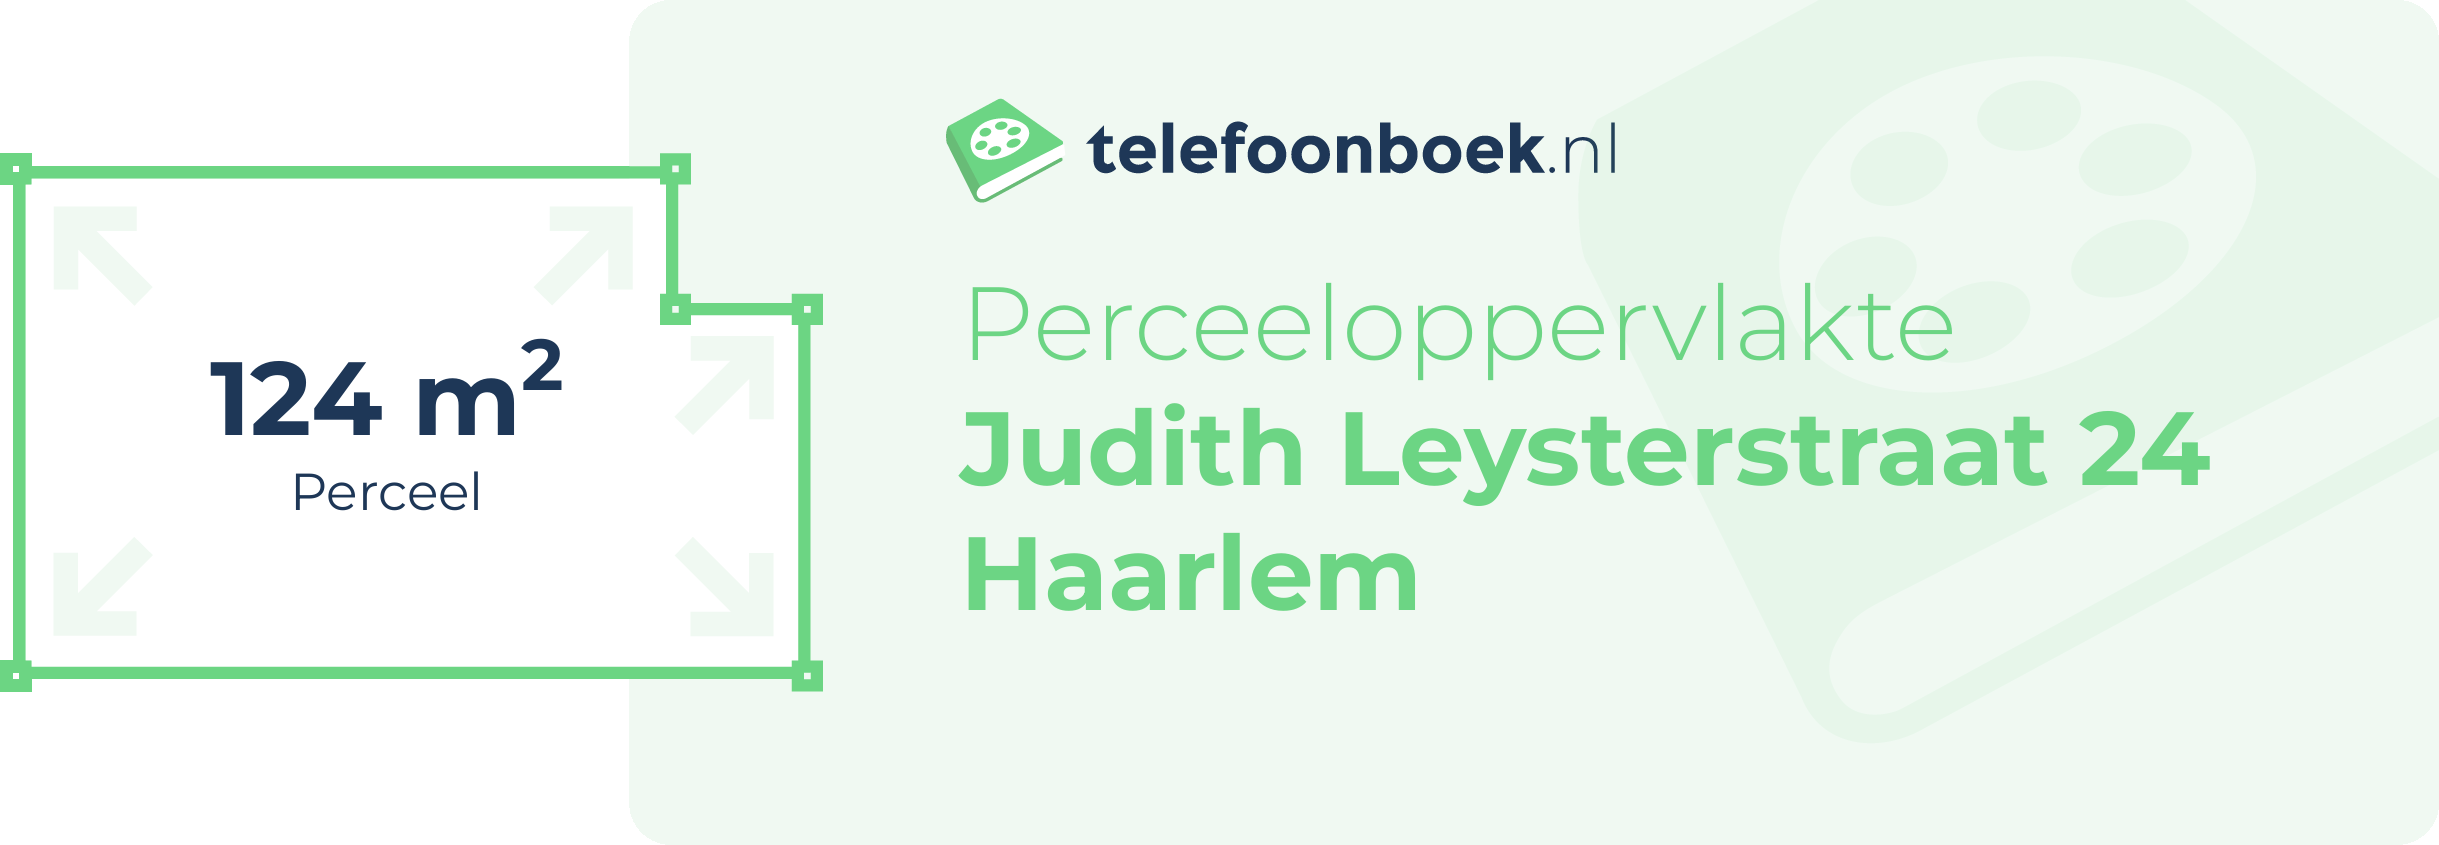 Perceeloppervlakte Judith Leysterstraat 24 Haarlem